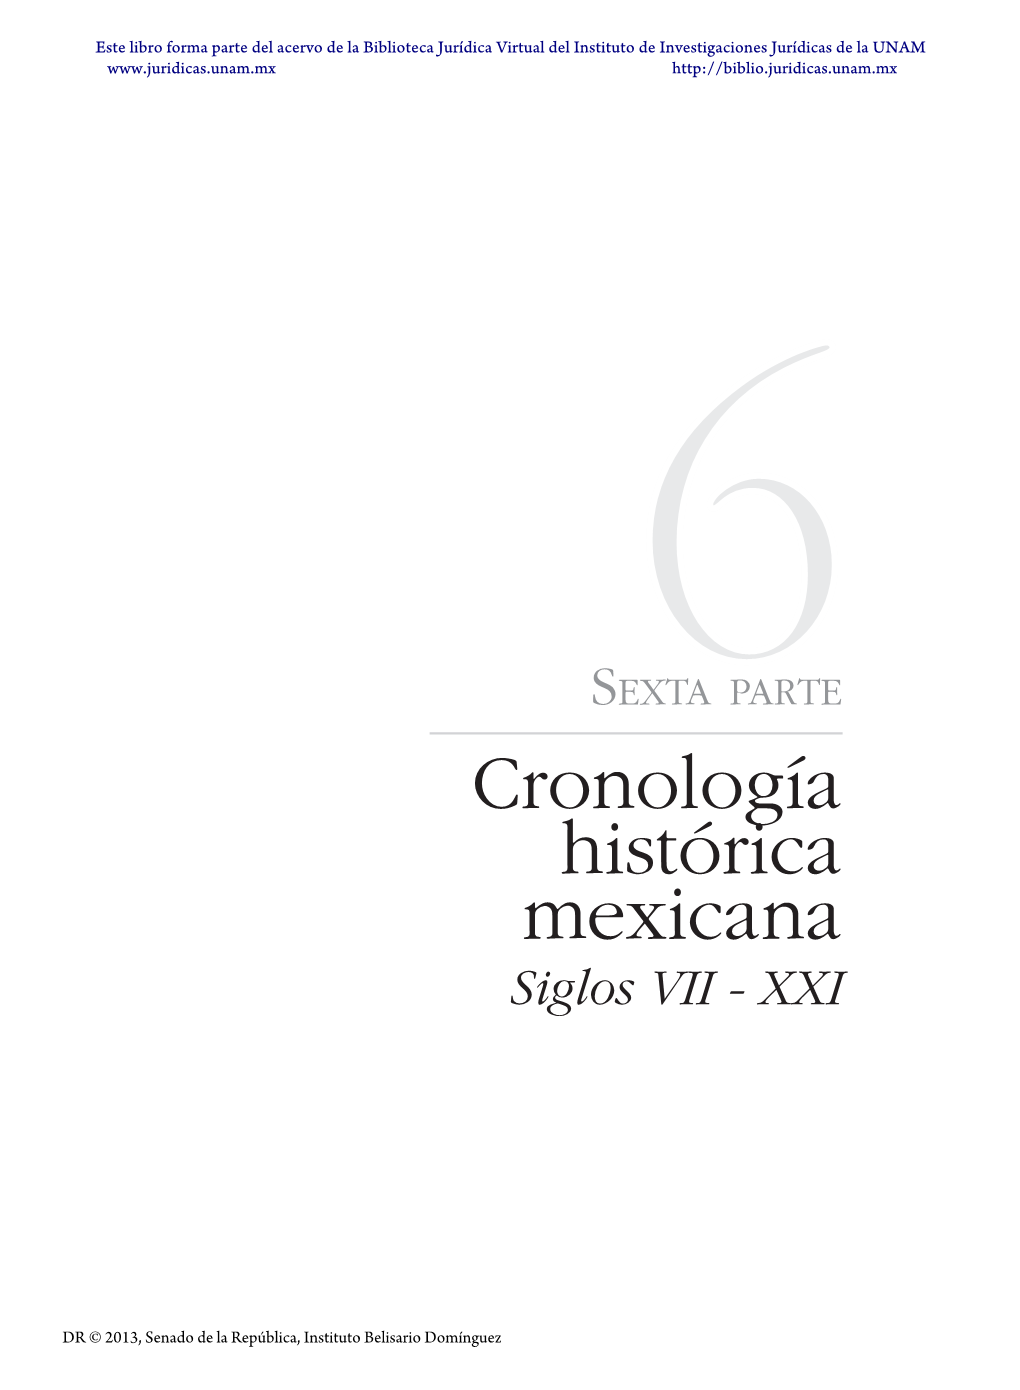 Cronología Histórica Mexicana Siglos VII - XXI